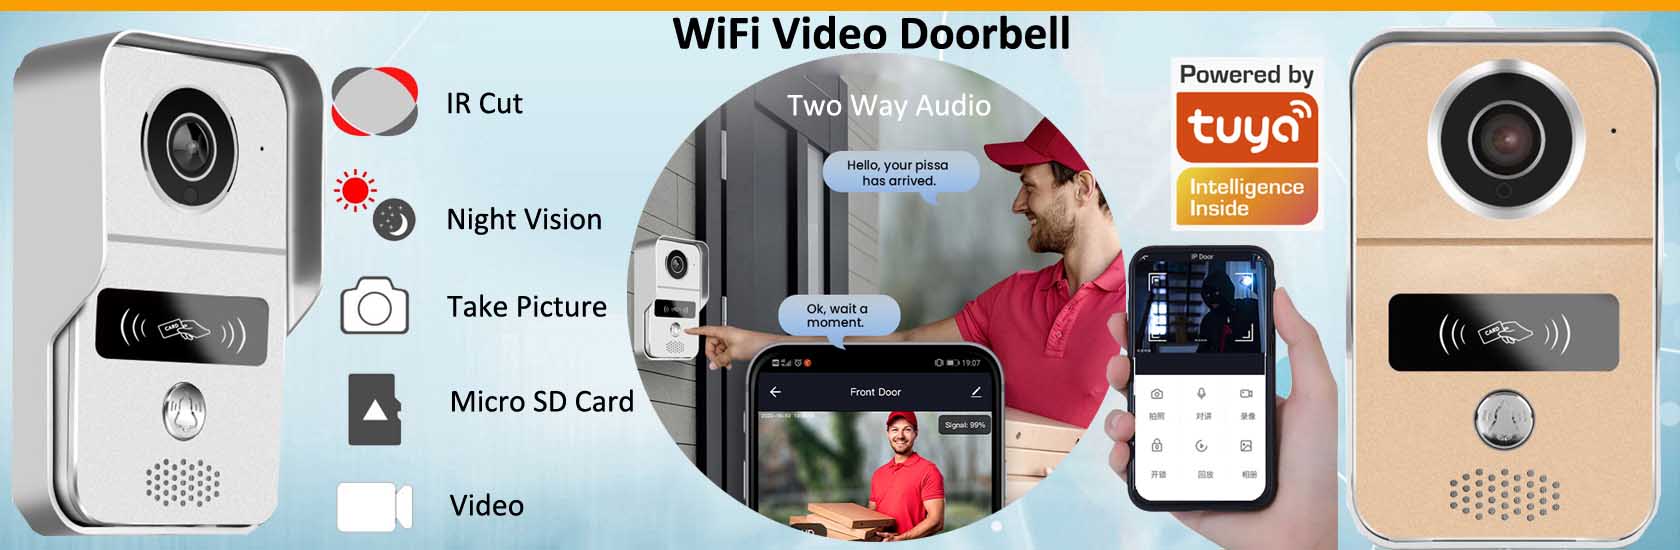 WiFi Video Doorbell VF-DB04